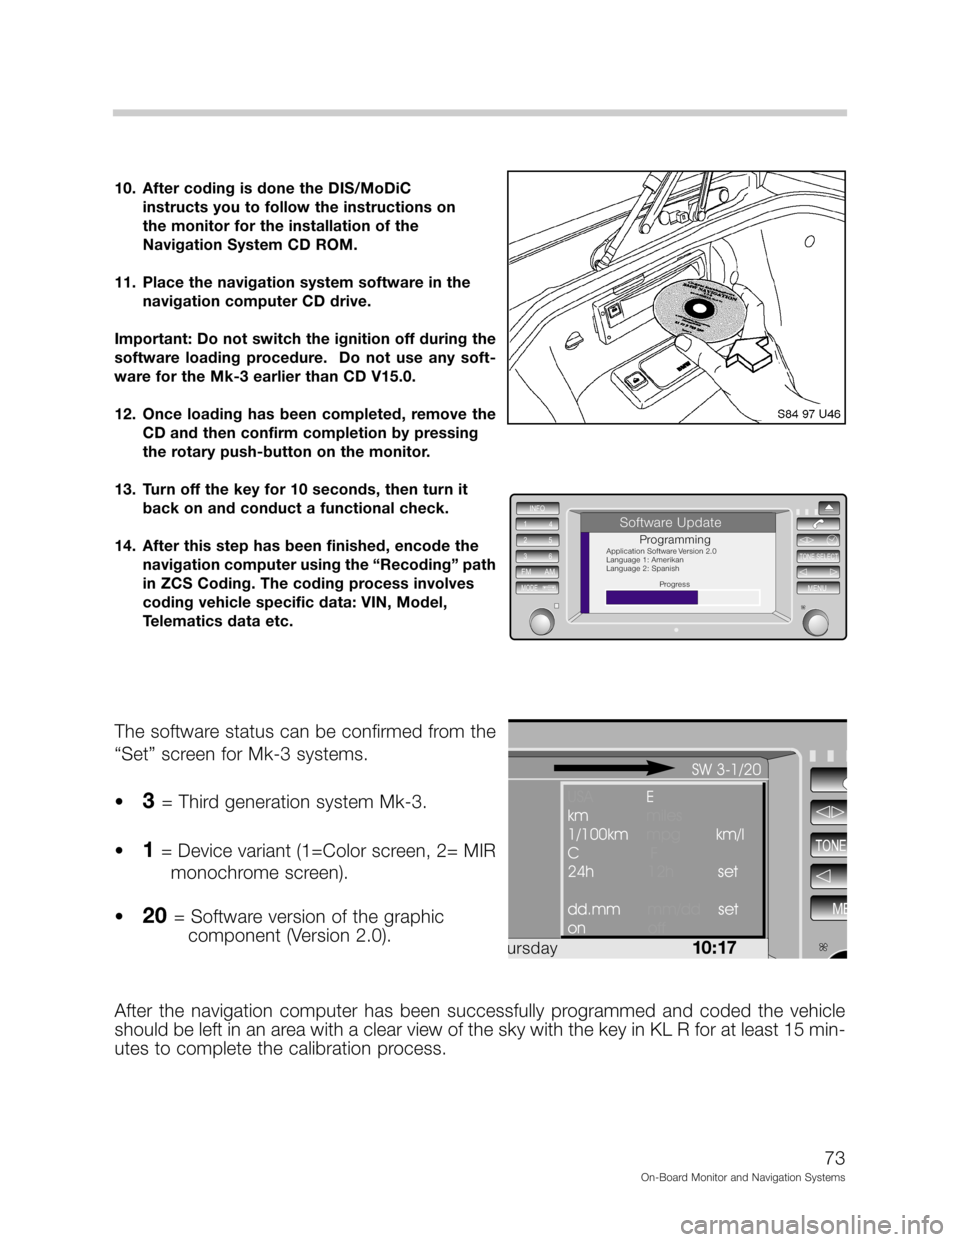 BMW 5 SERIES 1998 E39 On Board Monitor System Manual PDF ,.



"&
(	
#%) 6 !1 !&
=	 2
 !-67& ! !!
&.! 6& !"" !6&
", 1" !-.2	)
##) 